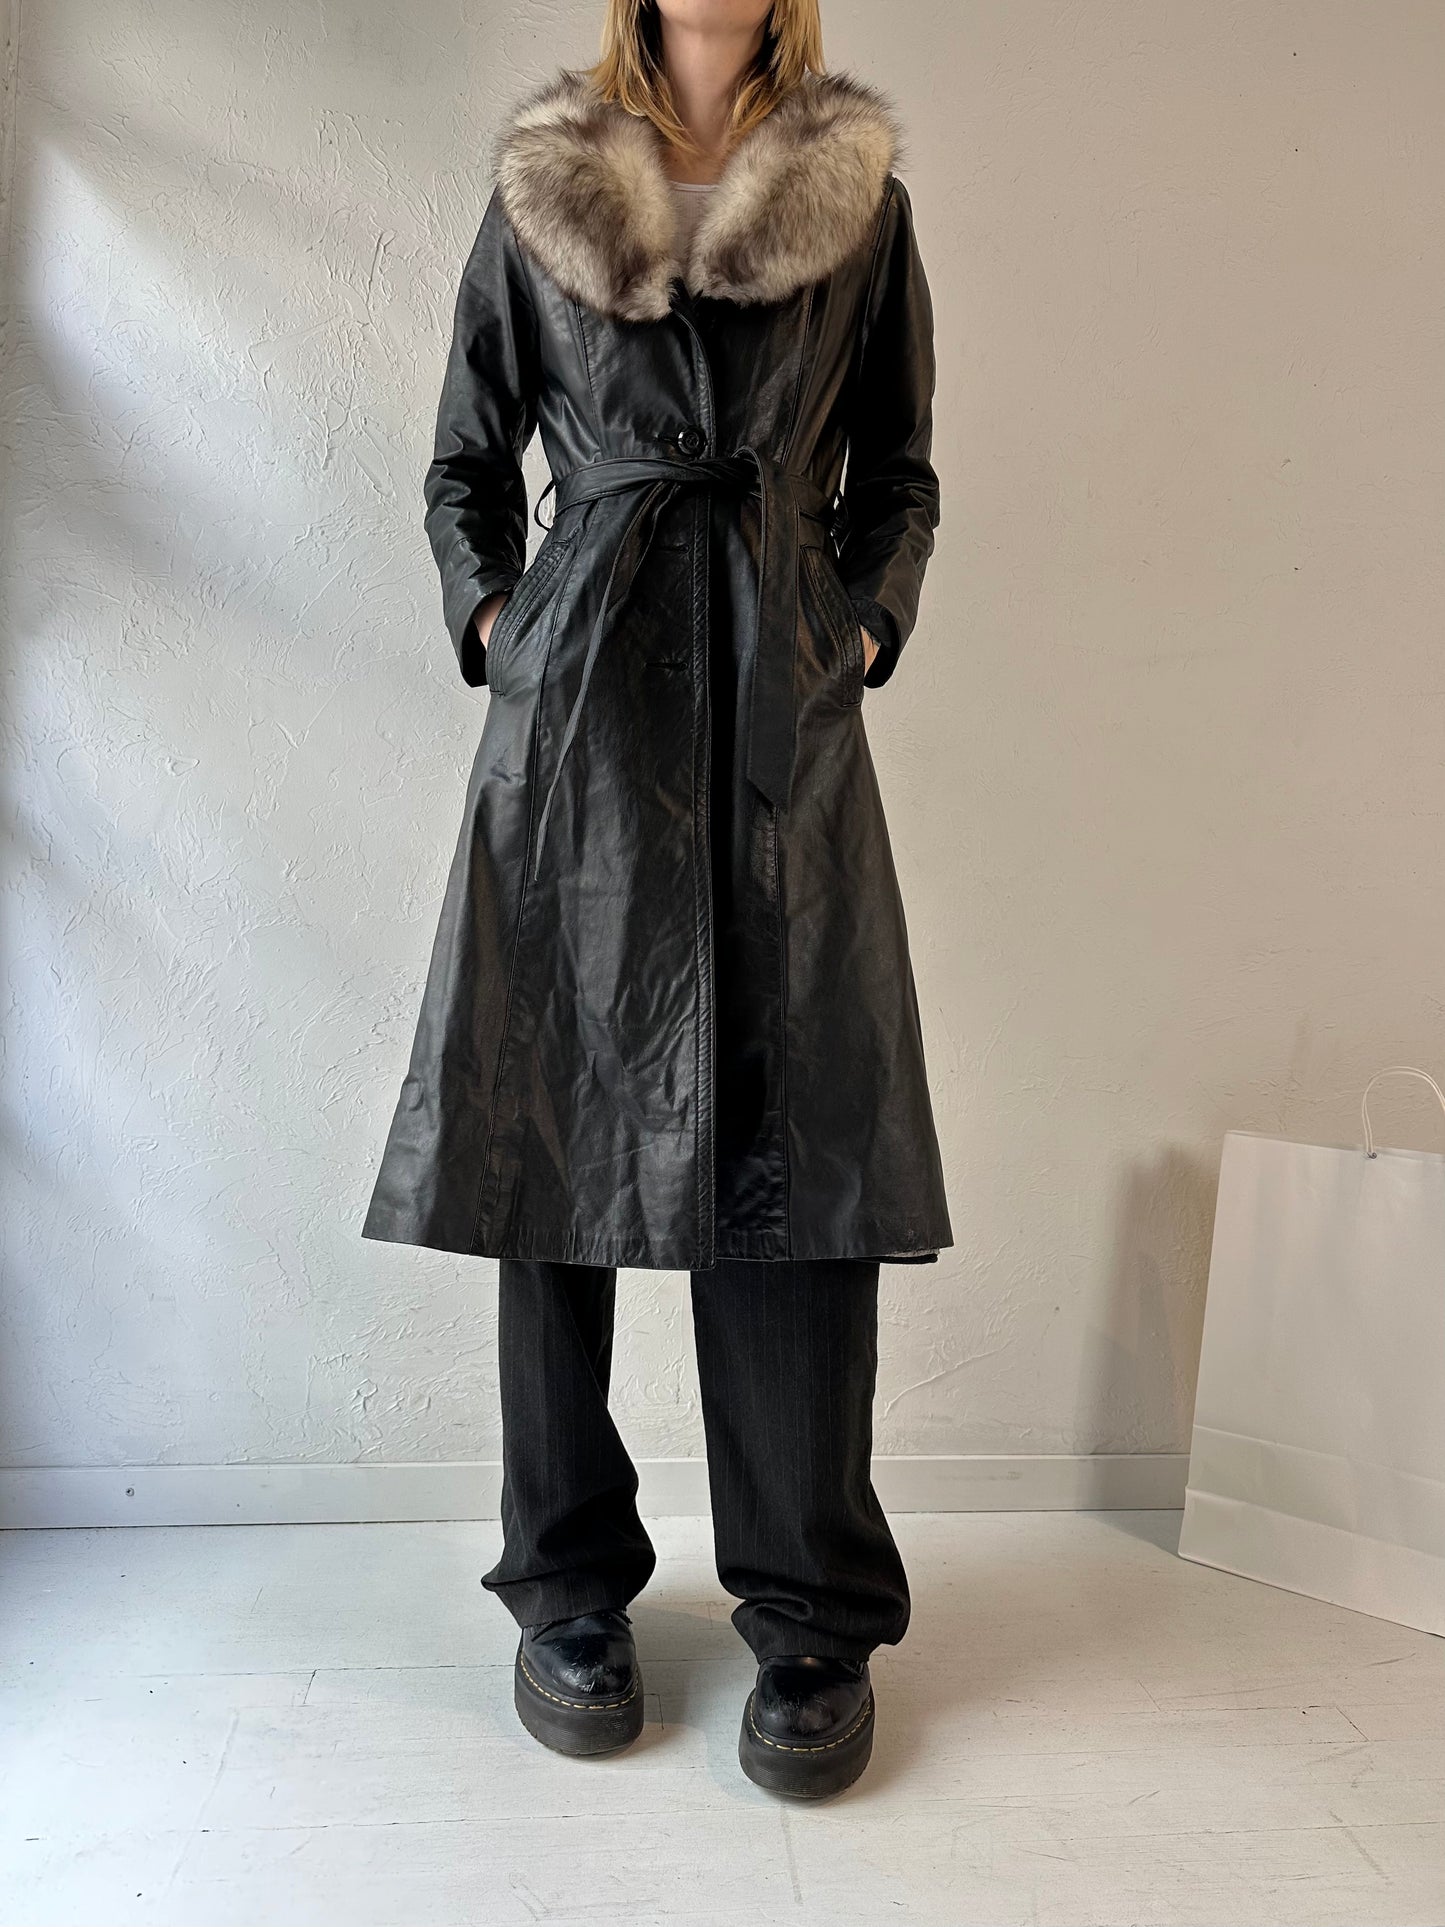 Vintage 'Cosa Nova' Black Leather Coat with Fur Collar / Small